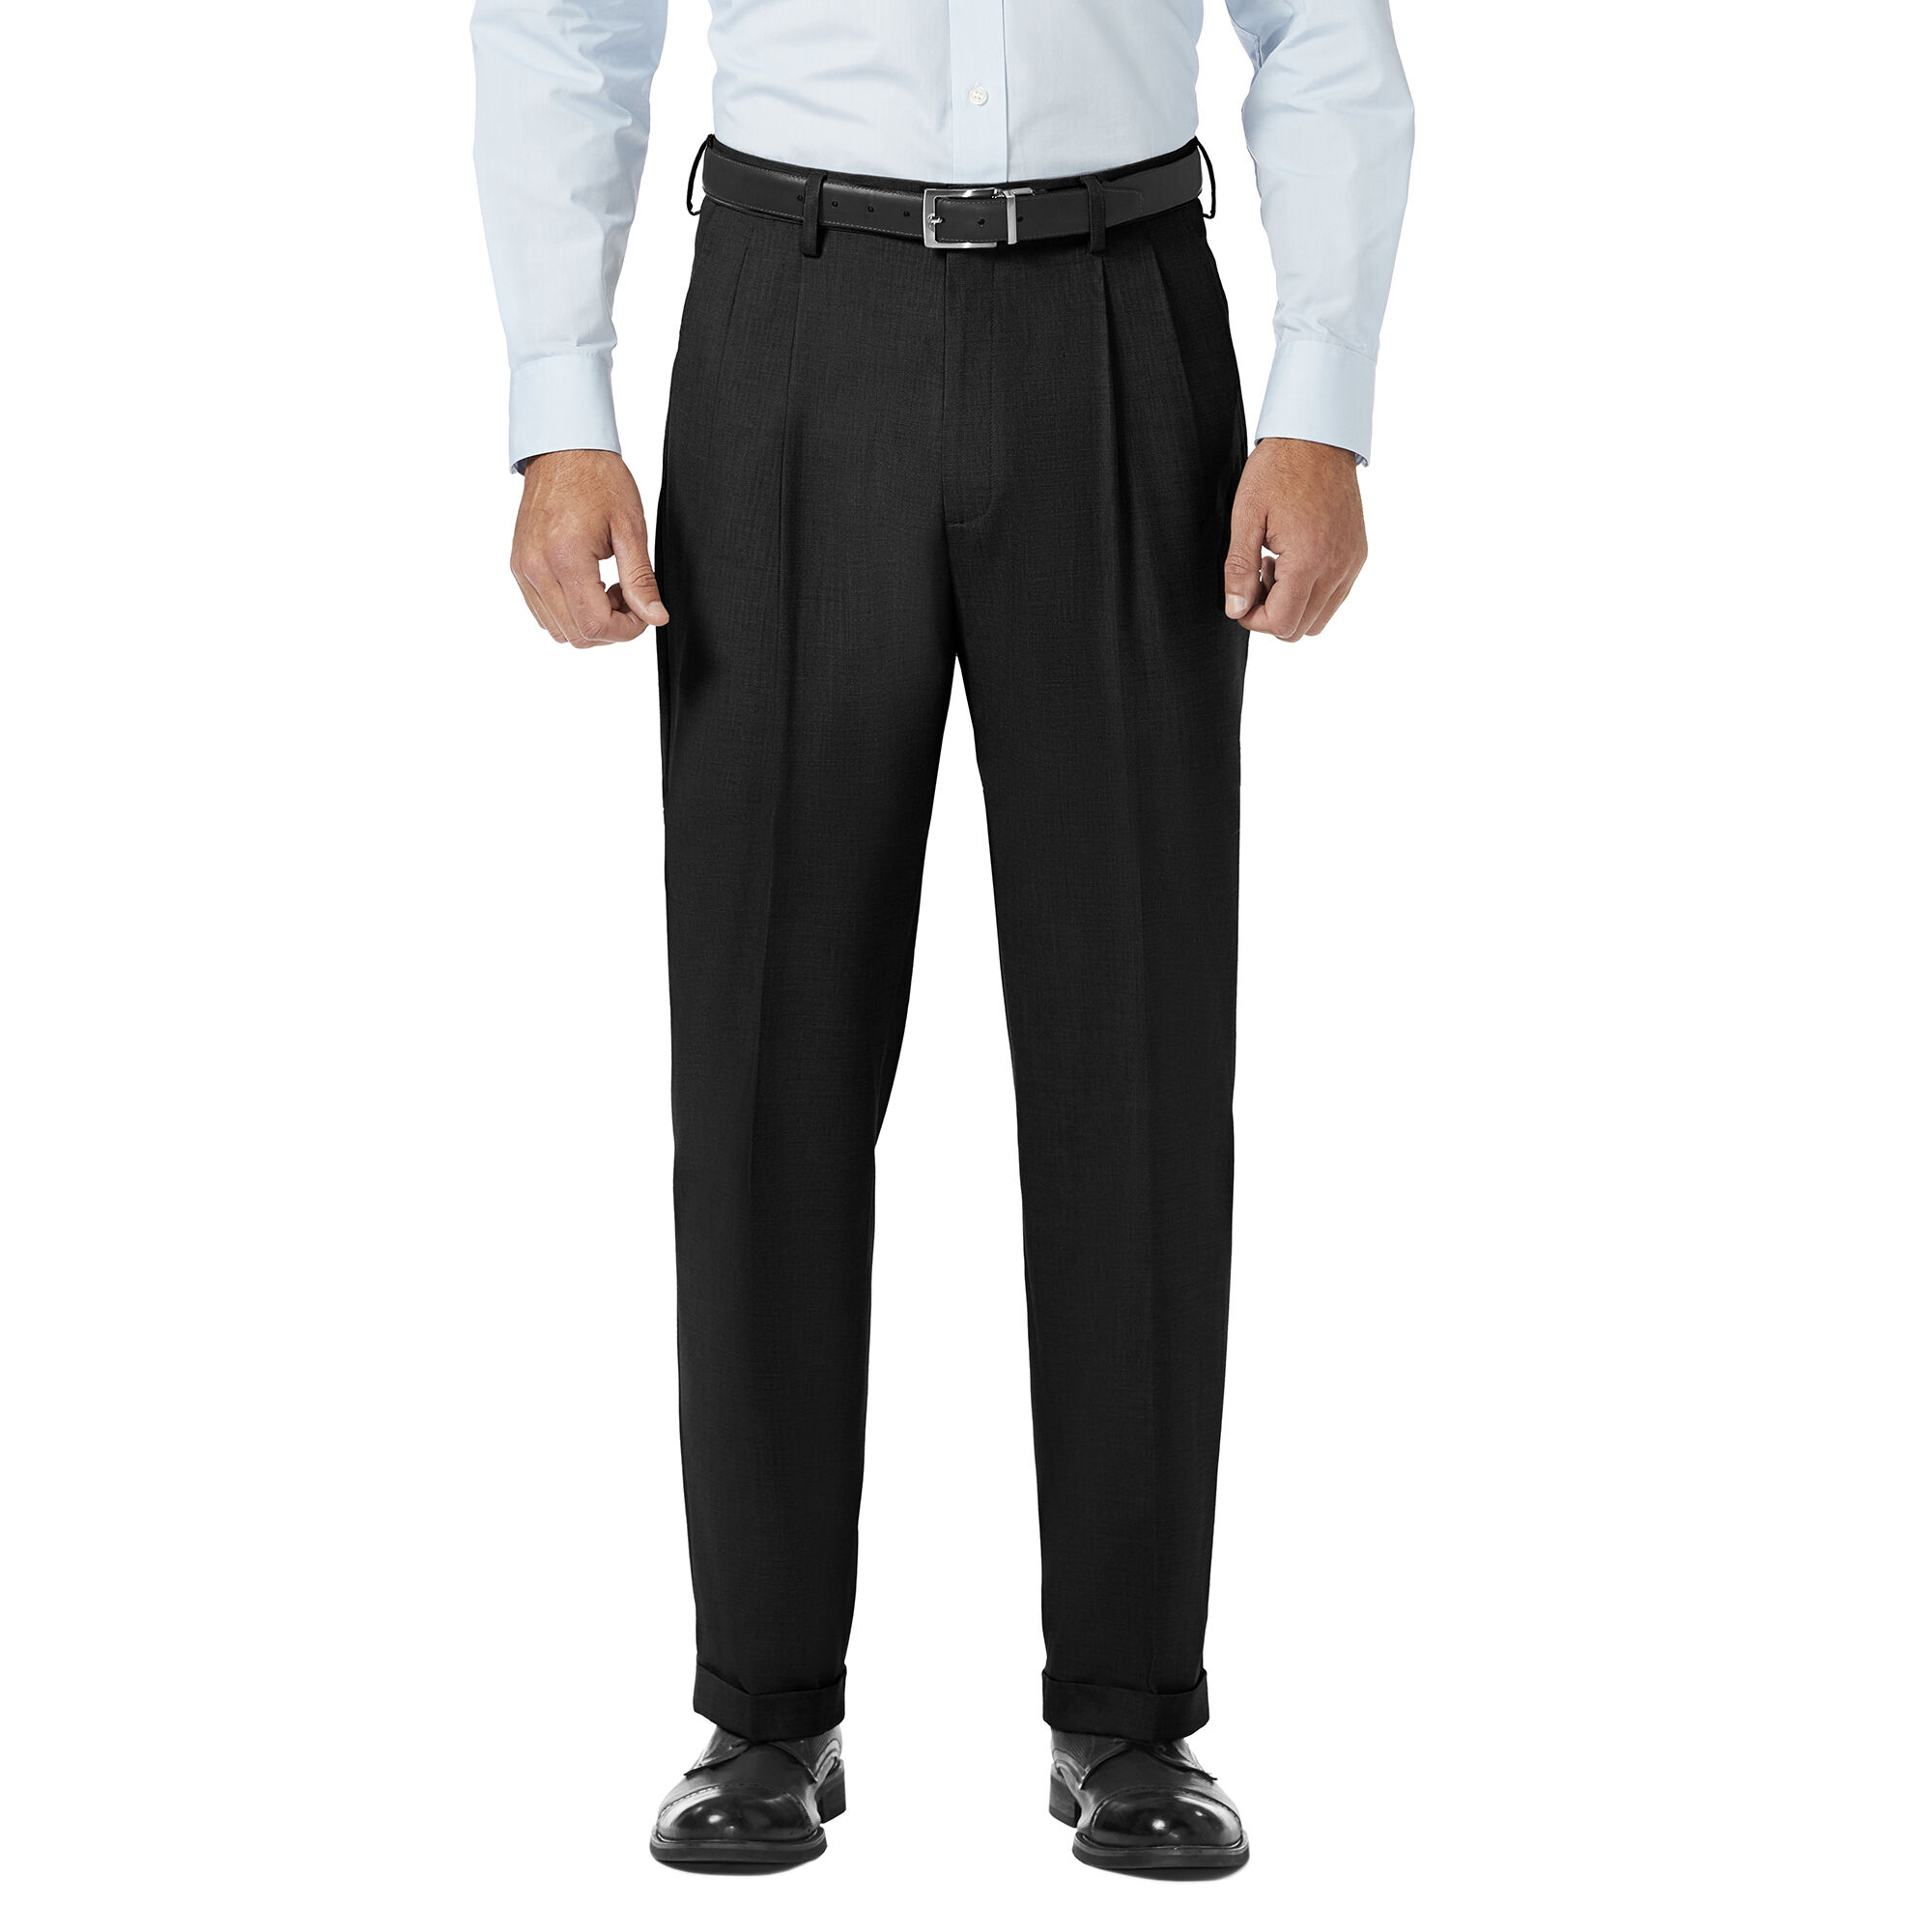 Alan Flusser Cuffed Pleated Dress Pants Pants for Men  Mercari